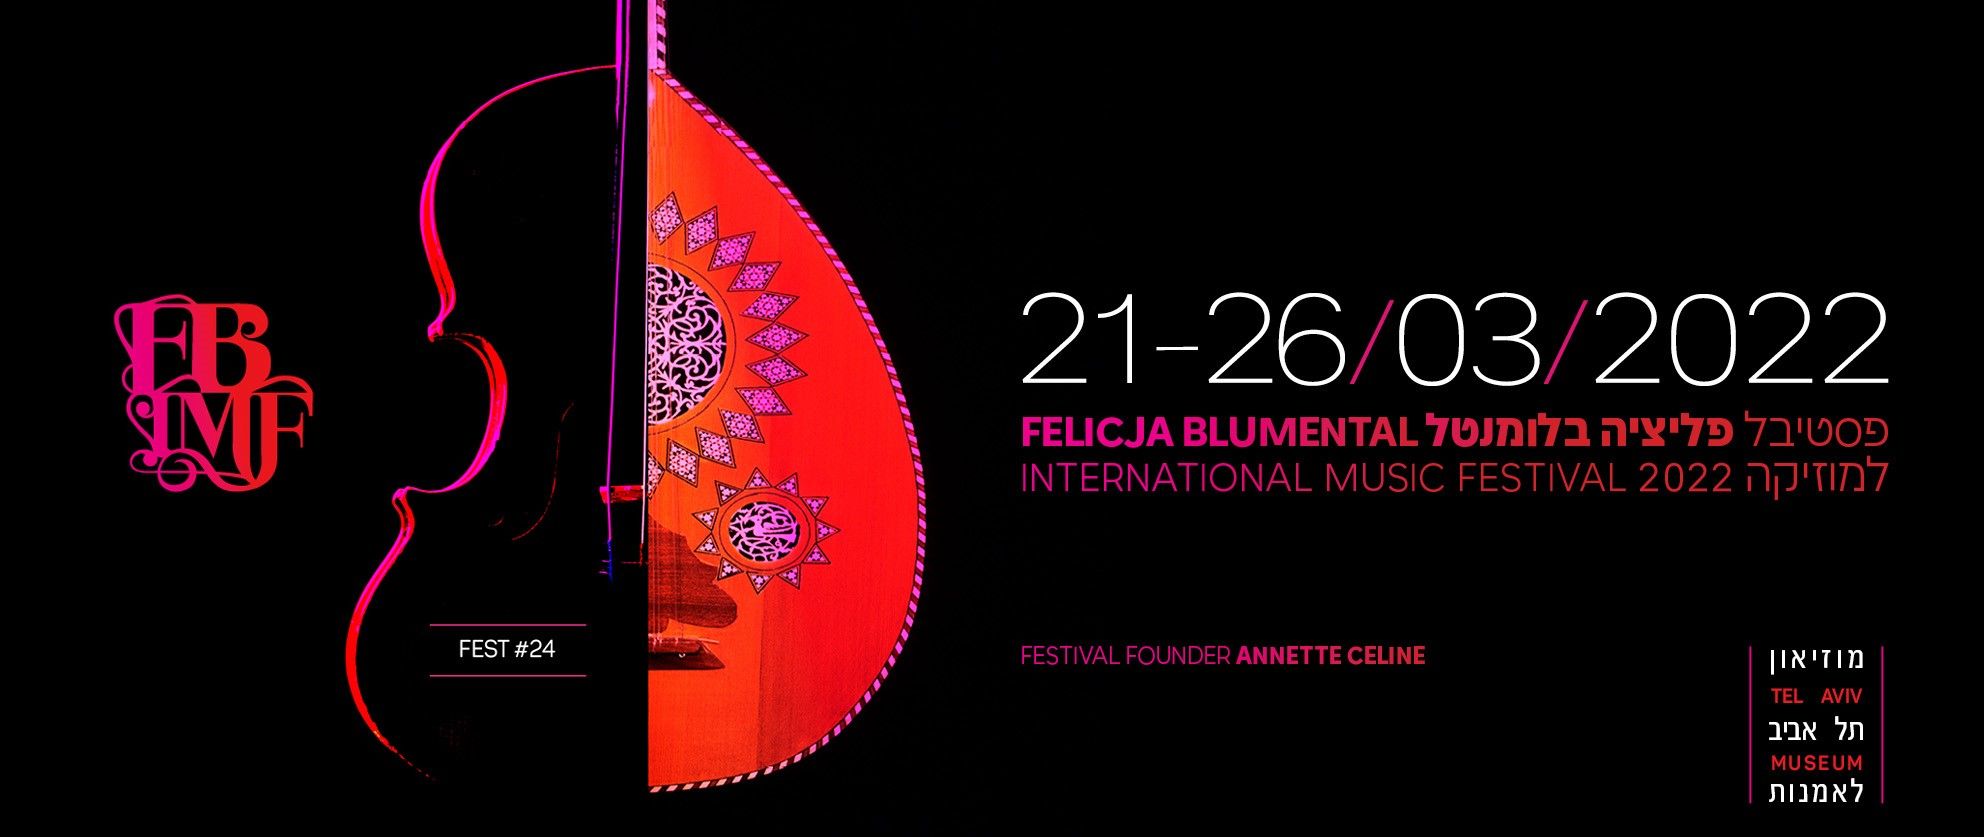 The Felicja Blumental International Music Festival 2022